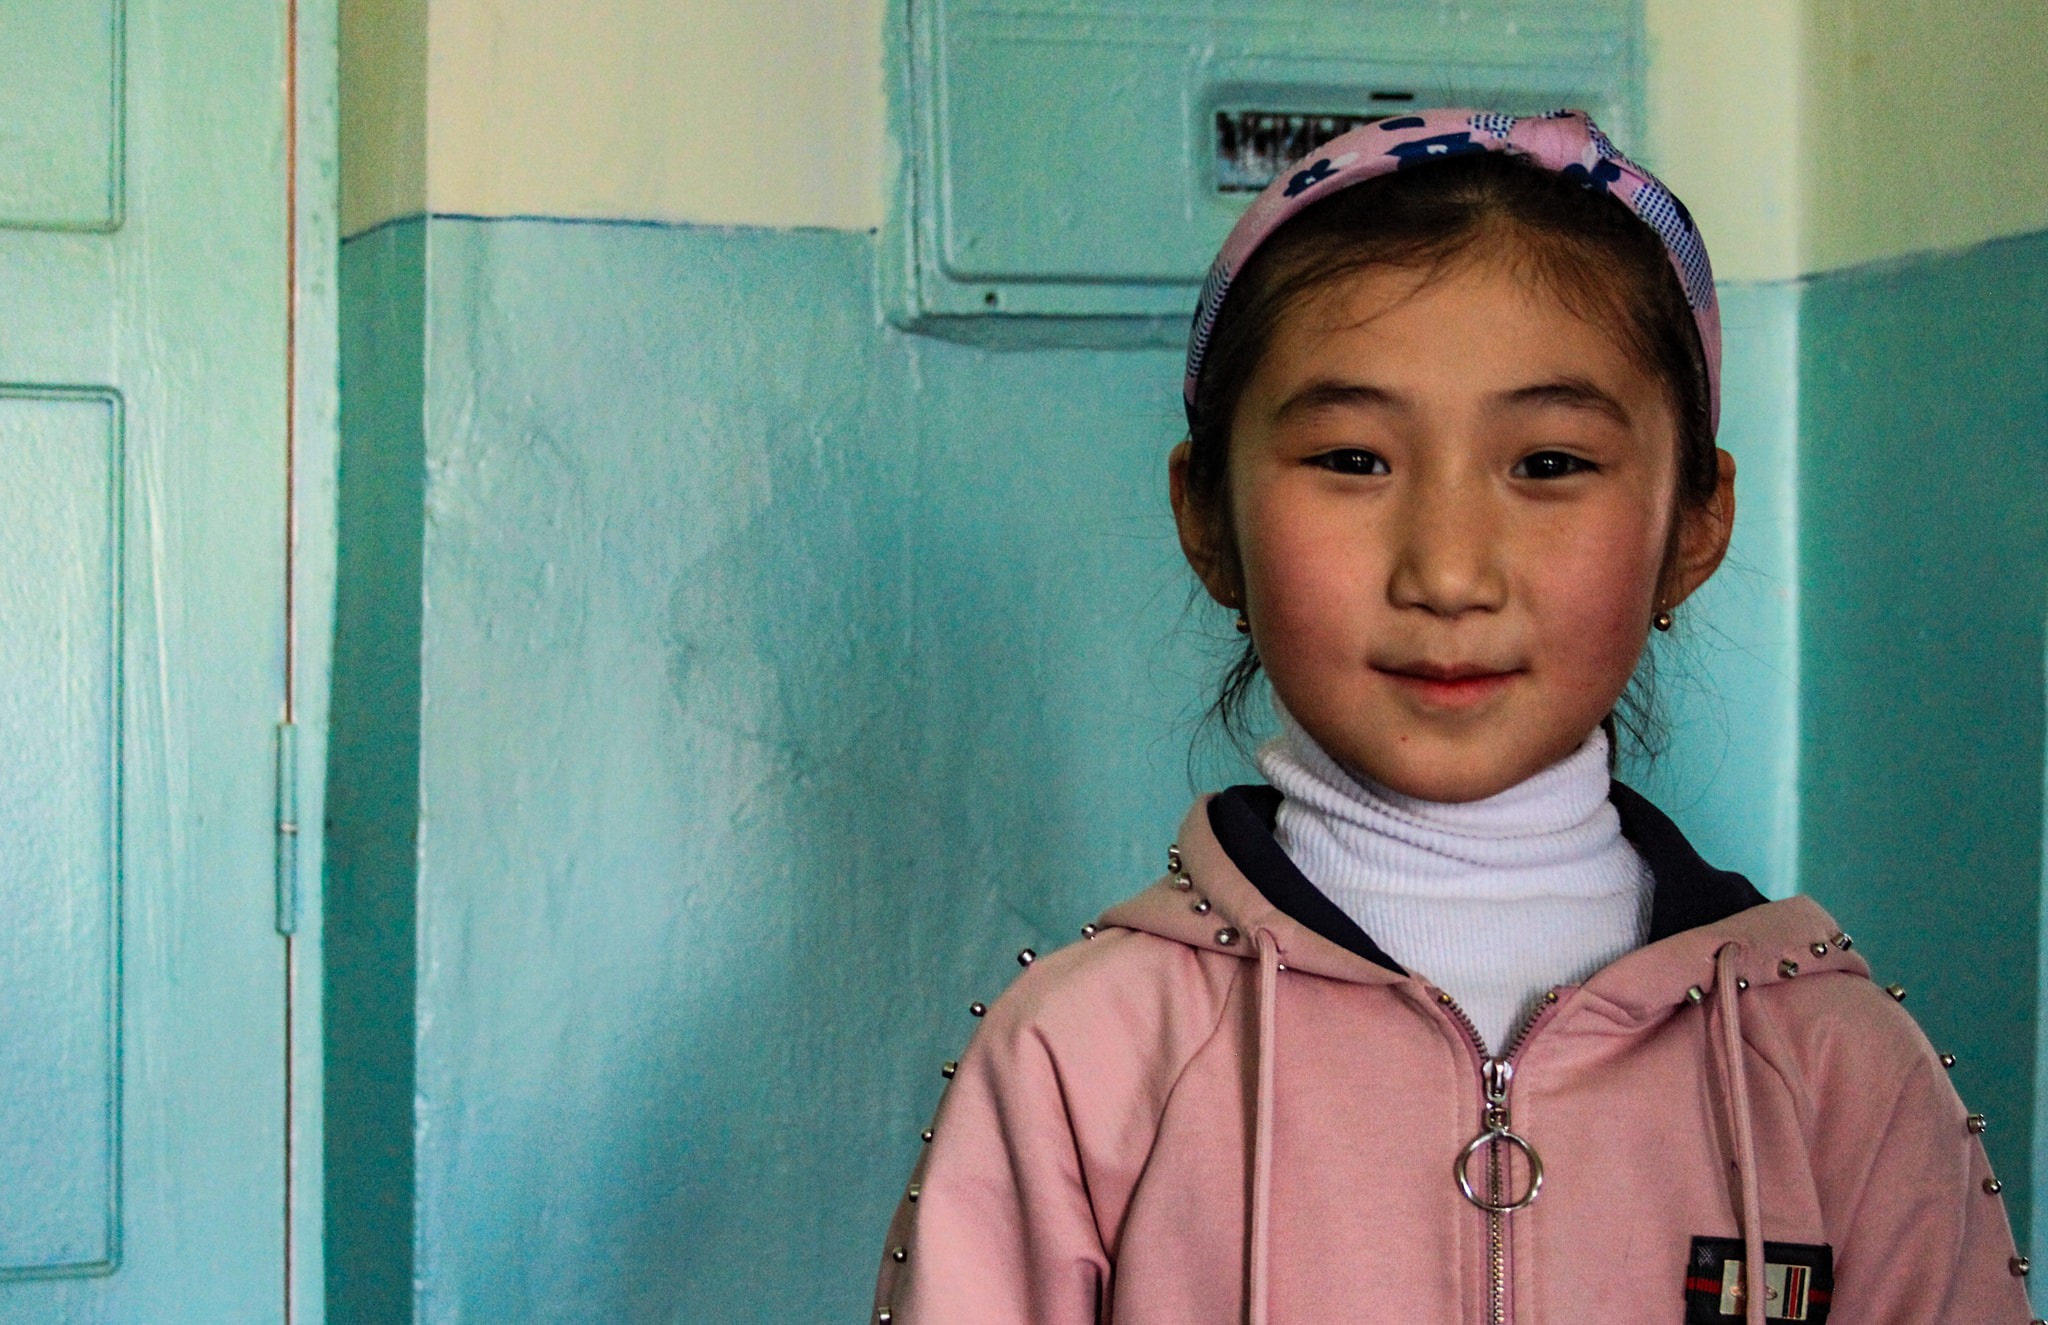 A schoolgirl in Osh, Kyrgyzstan